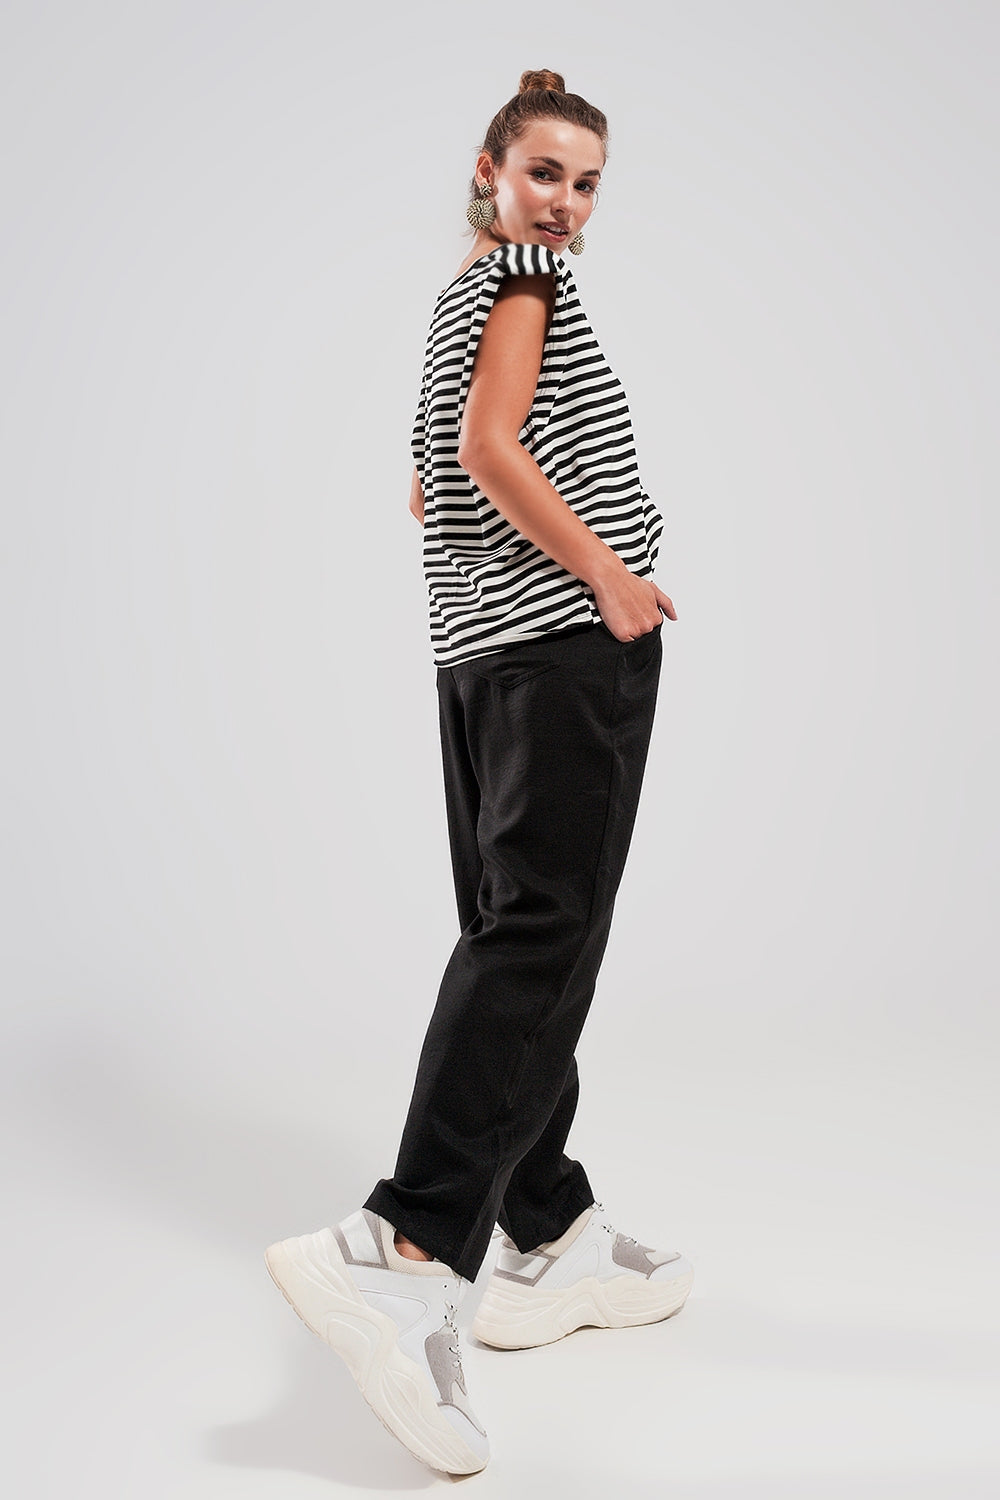 Sleeveless t shirt with shoulder pad in black stripe Szua Store